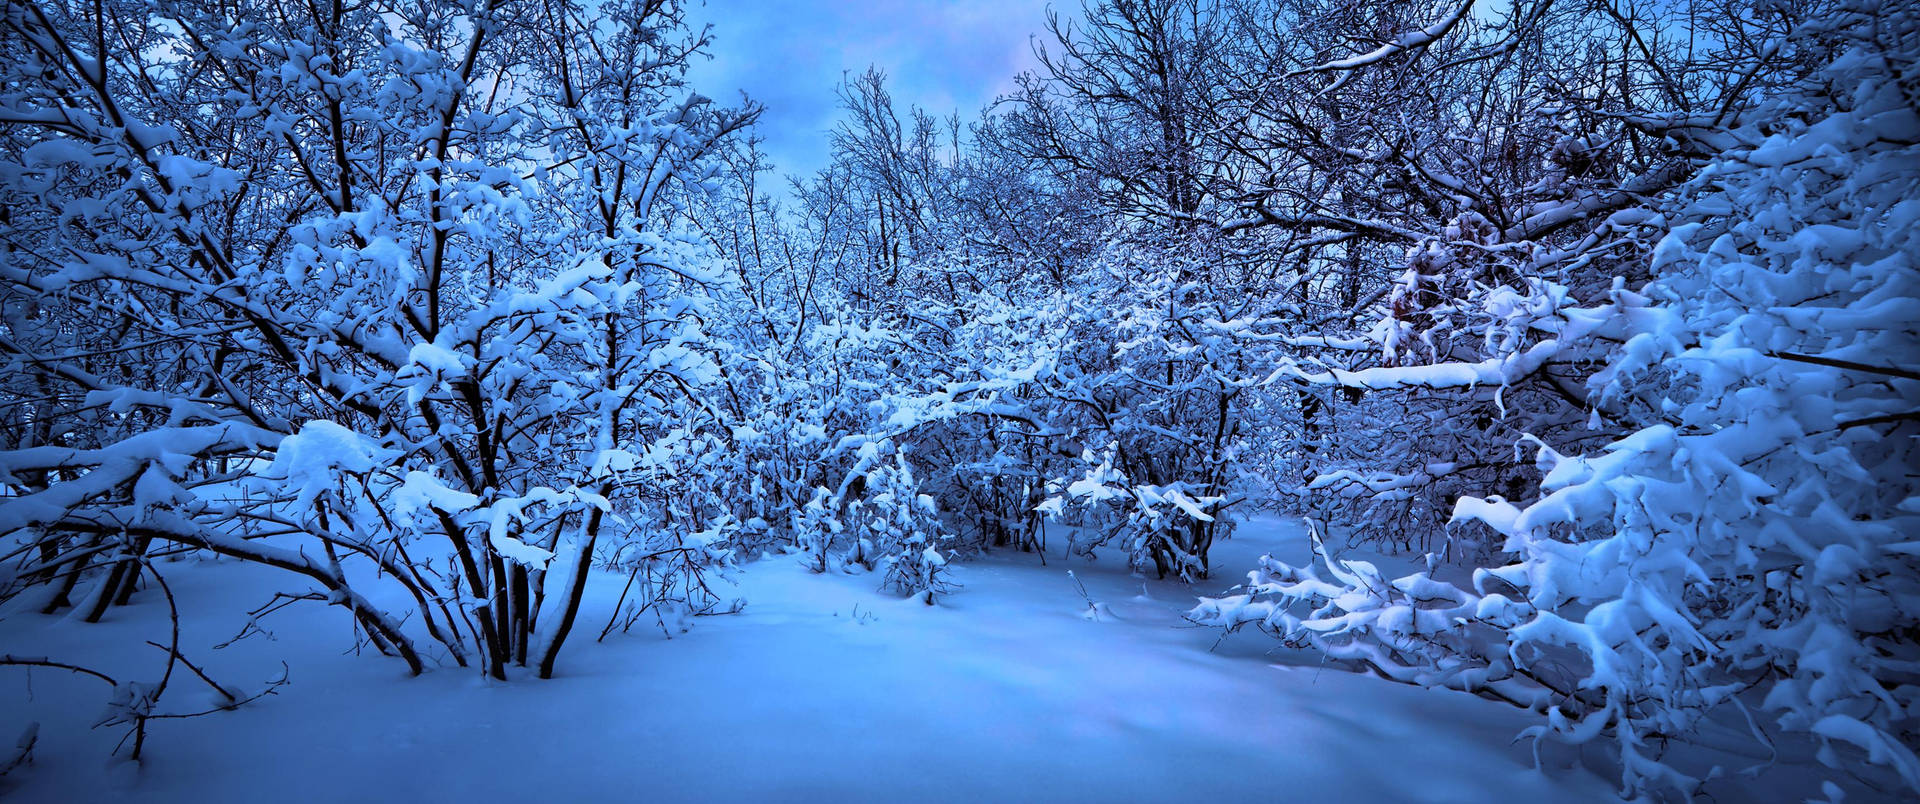 Ultra Wide 4k Frozen Blue Forest Background